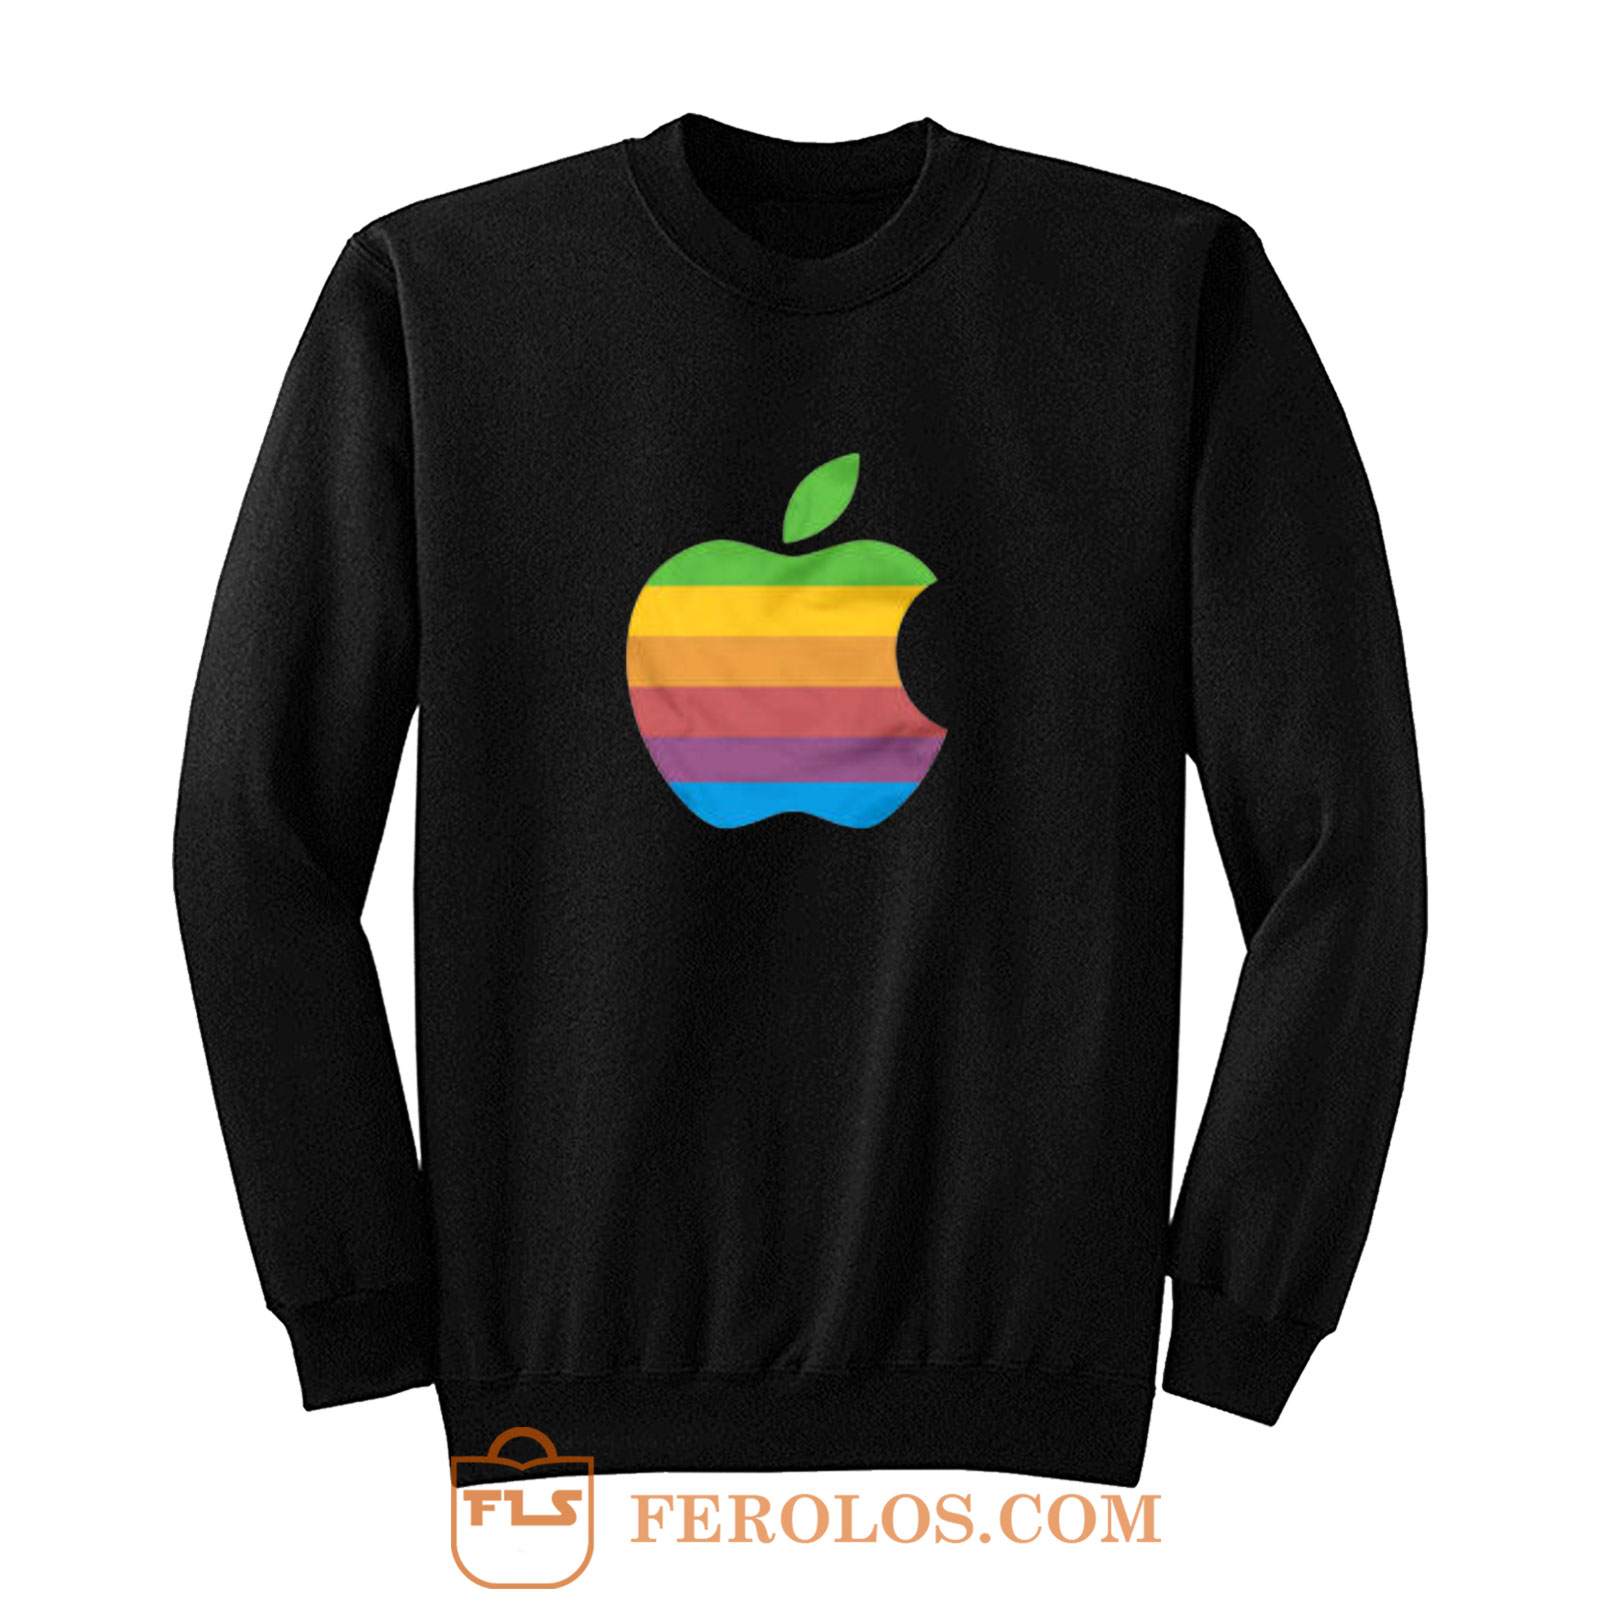 Logo Rainbow Sweatshirt Computer 80s Apple